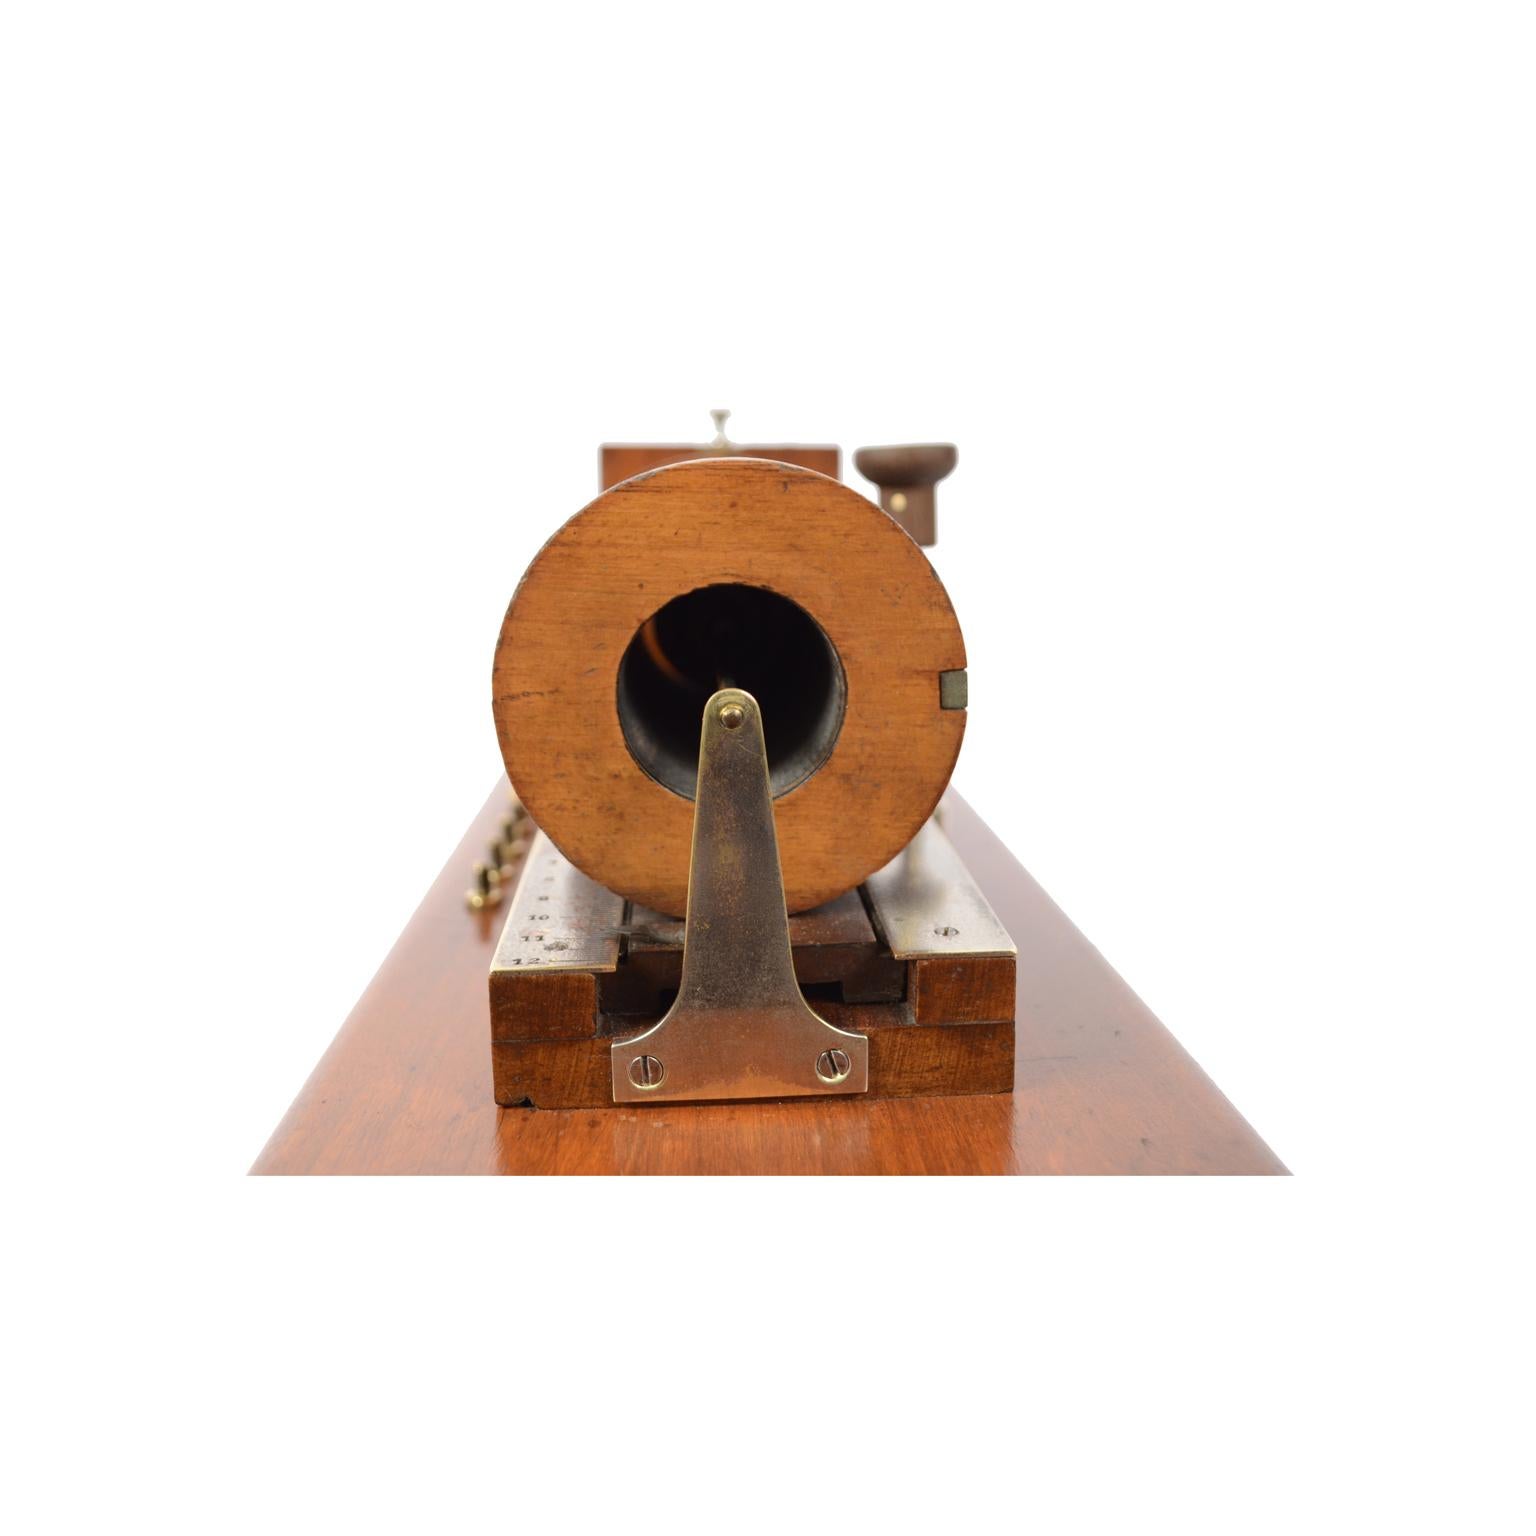 Induction Coil or Sled Antique Scientific Instrument by Du Bois Reymond 1870  For Sale 2